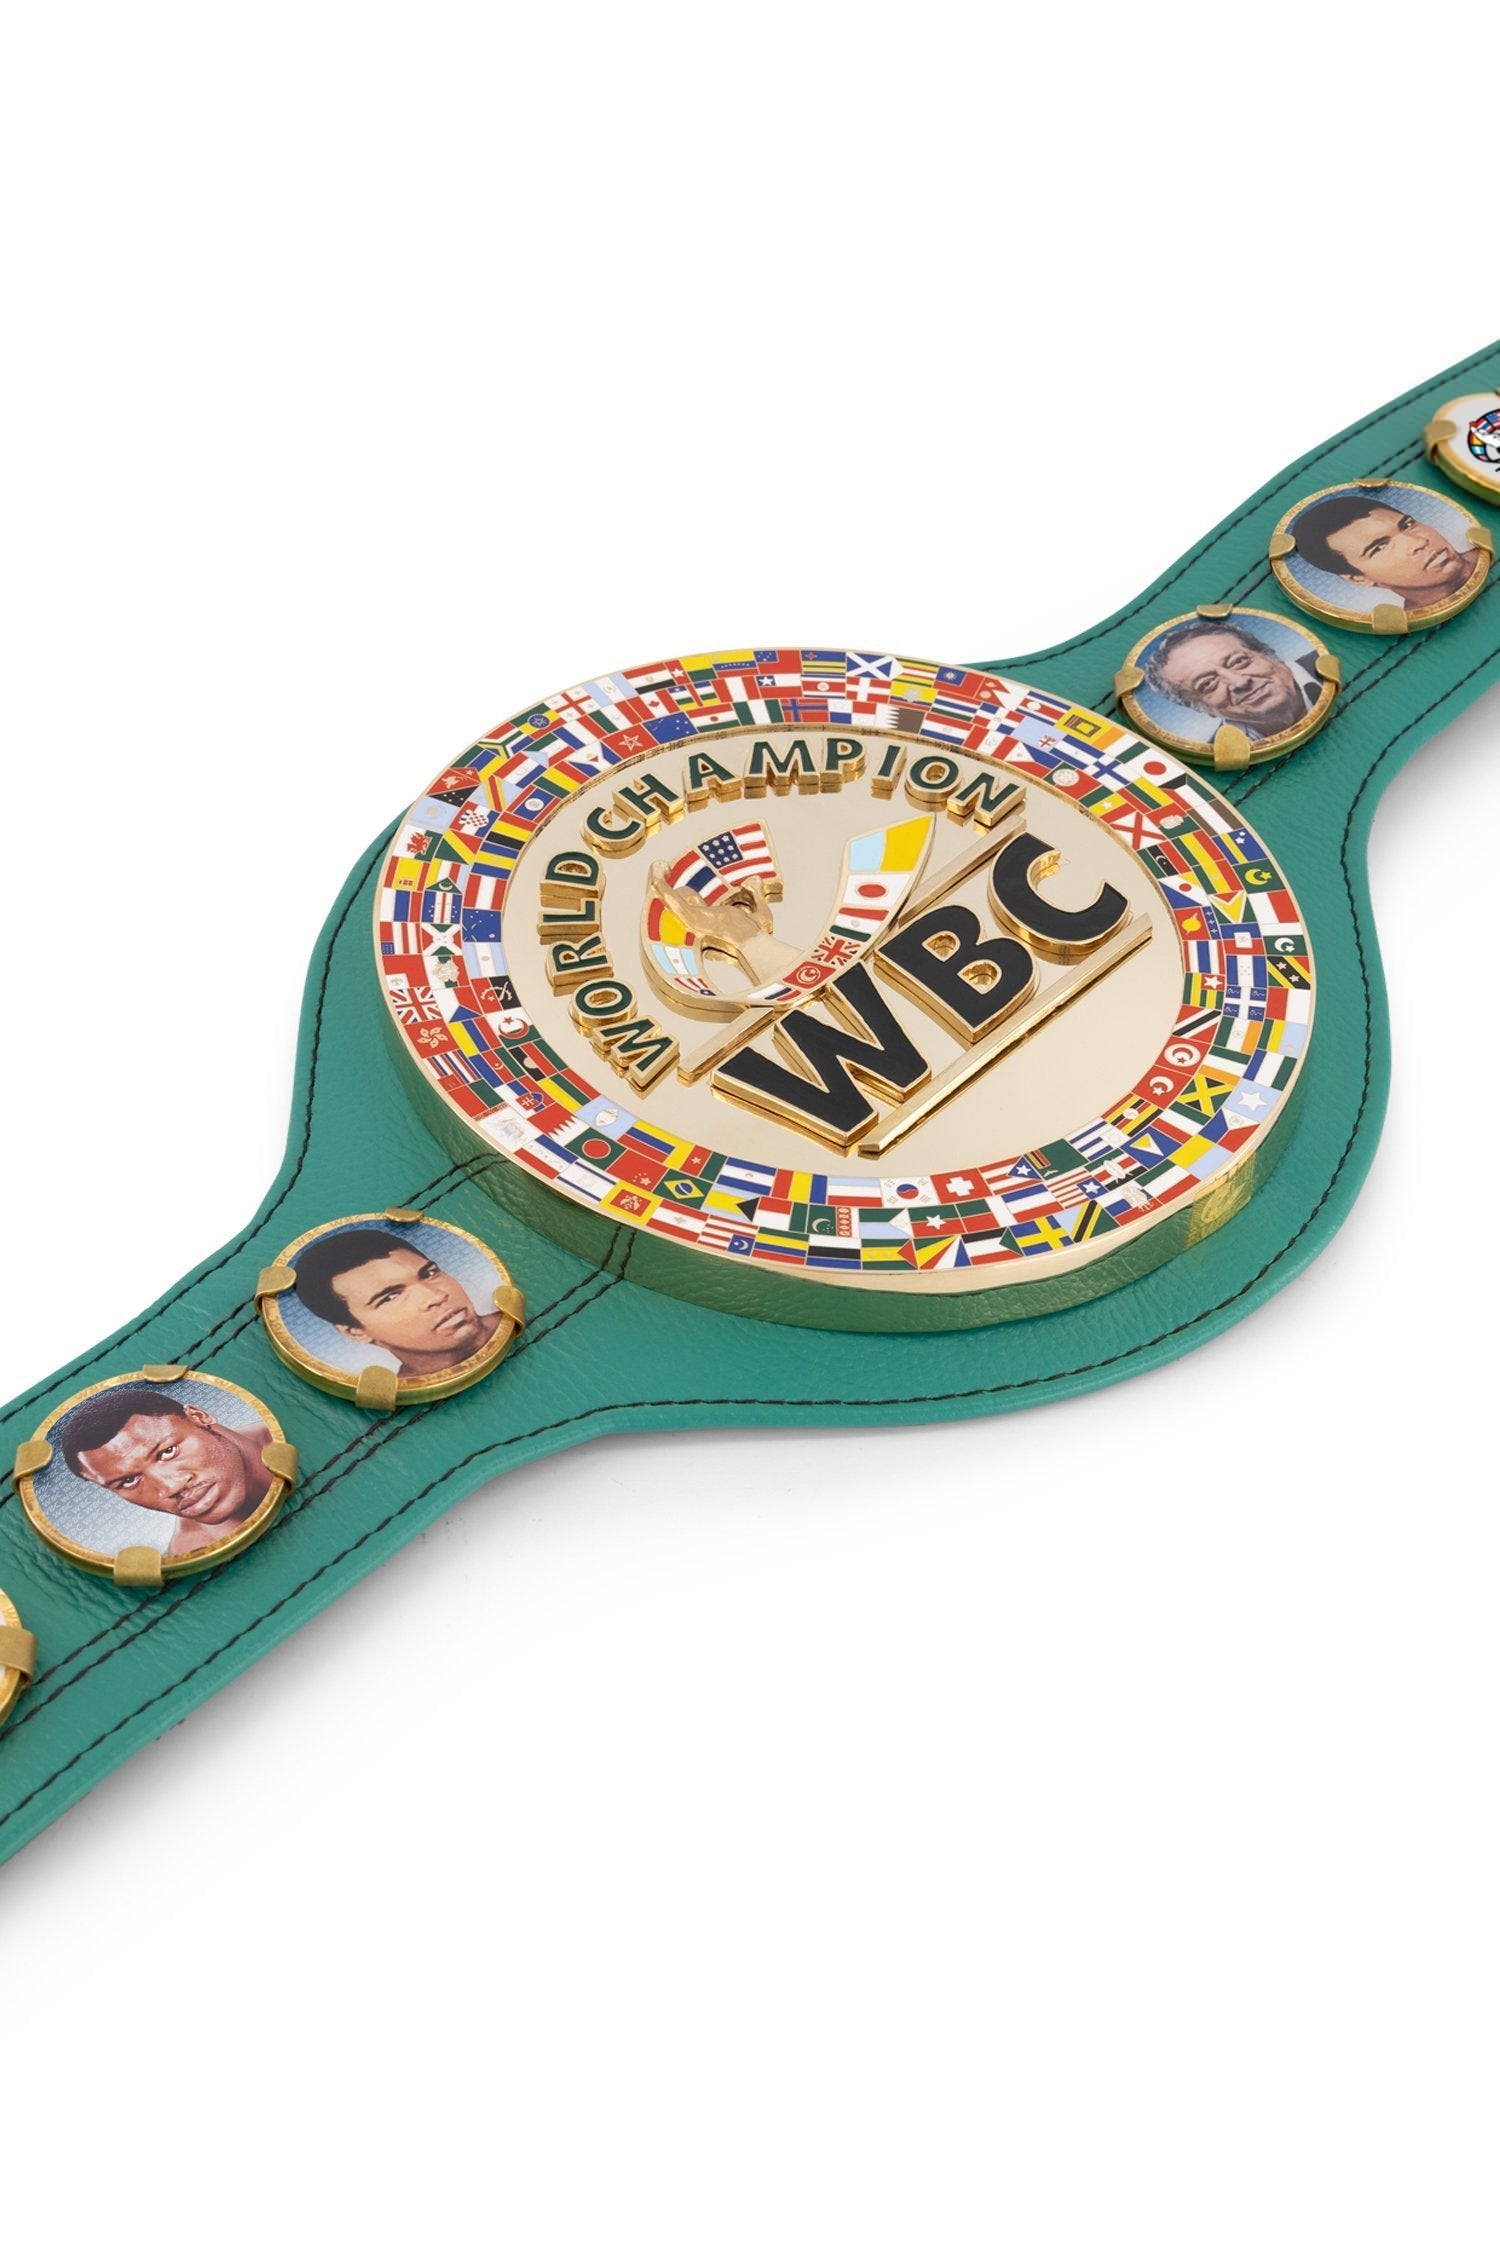 WBC Store WBC - Championship Belt "In Honor to Muhammad Ali Collection" Muhammad Ali vs. Joe Frazier III